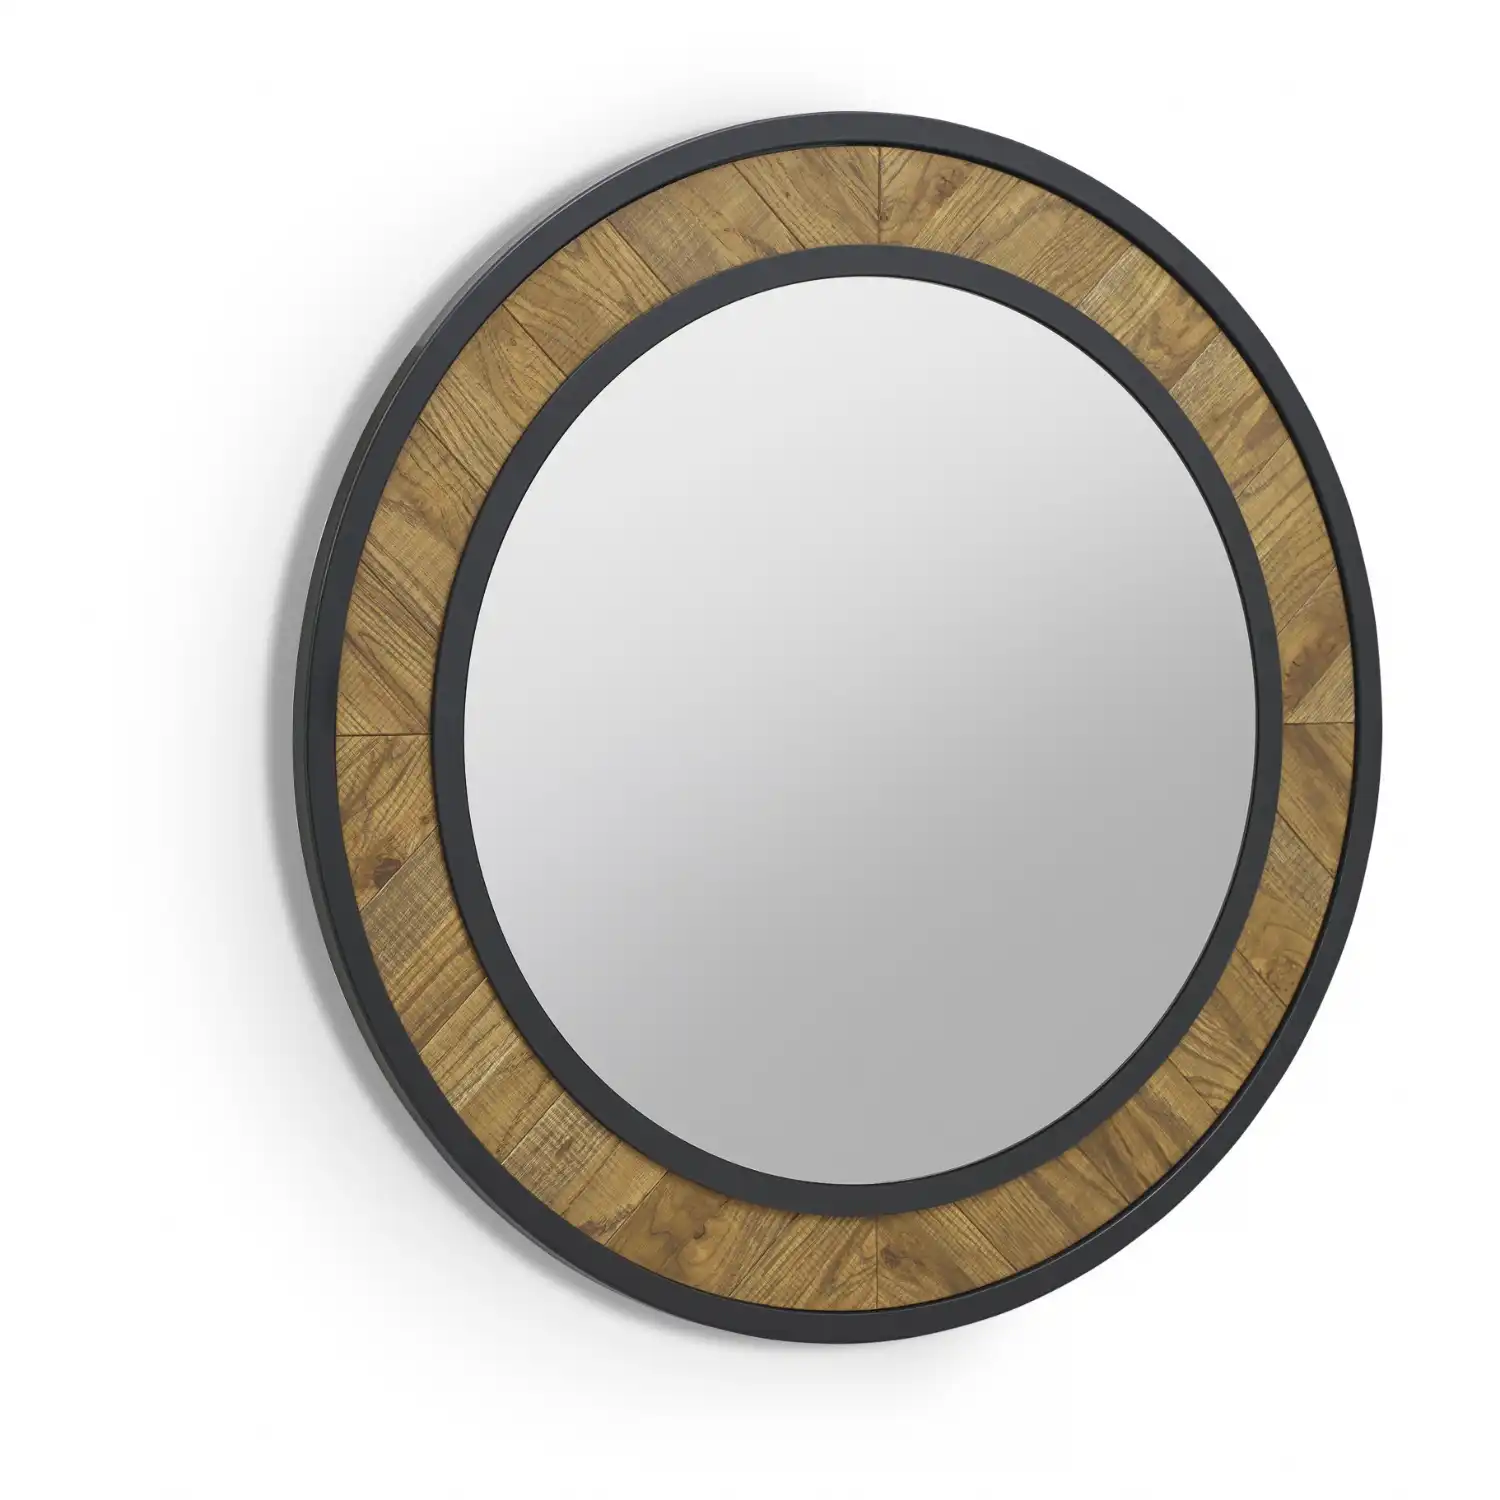 Rustic Oak Round Wall Mirror Herringbone Pattern